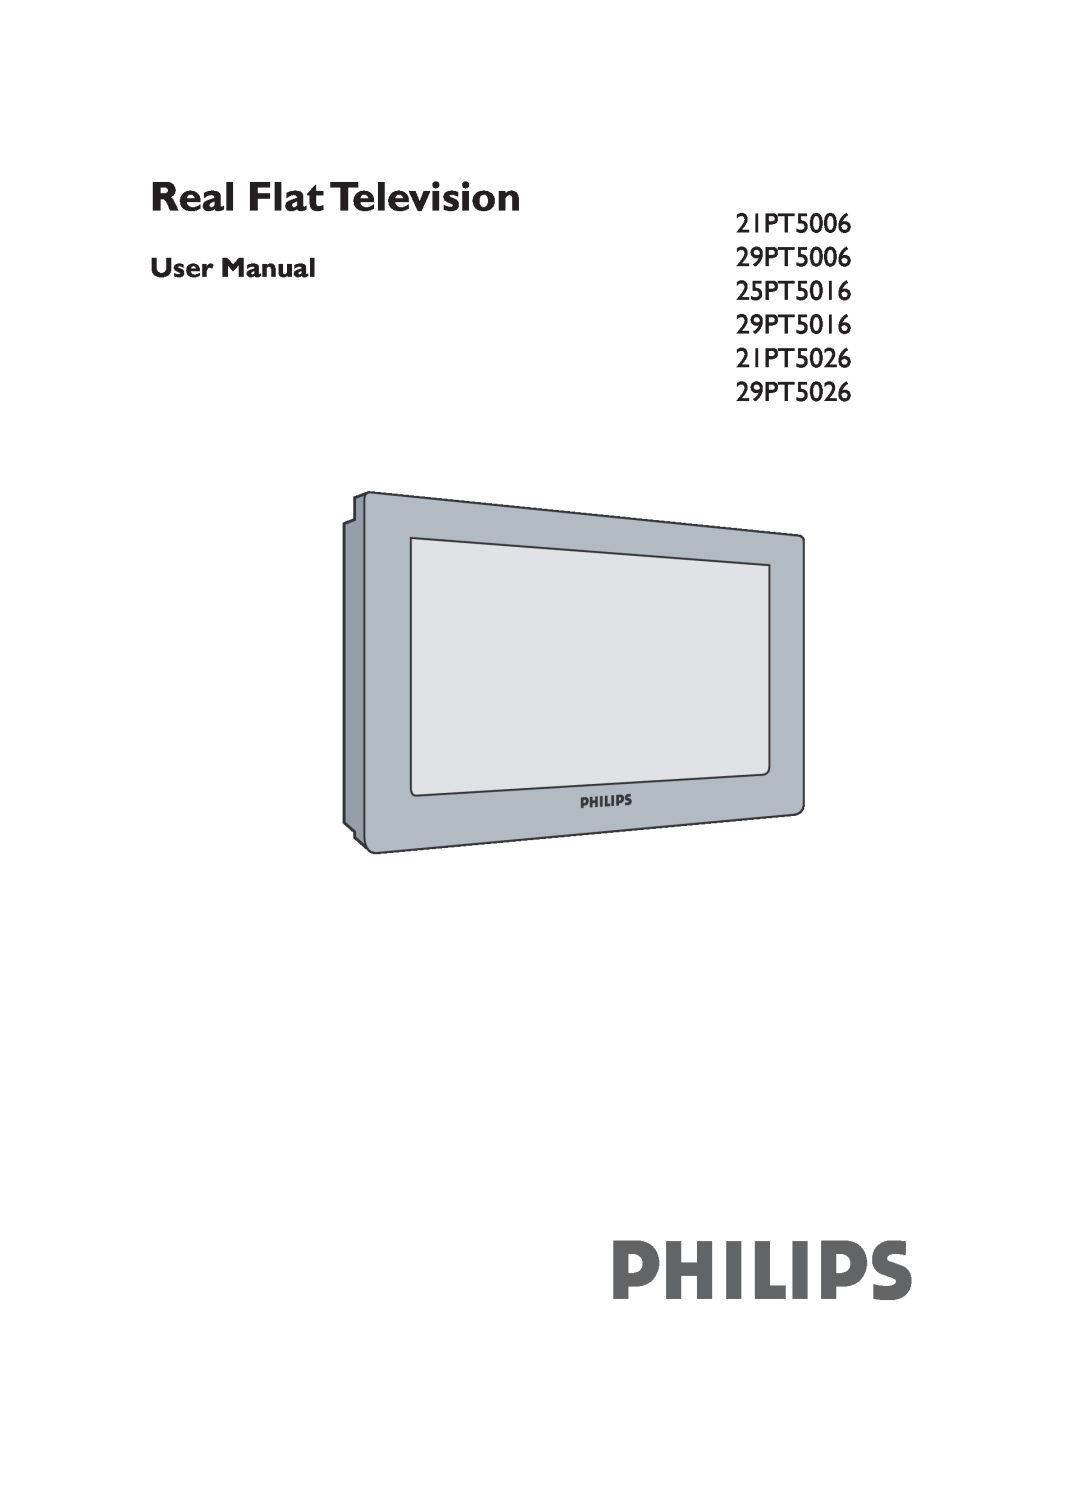 Philips manual 21PT5006, 29PT5016 21PT5026 29PT5026, ﺢﻄﺴﻣ نﻮﻳﺰﻔﻠﺗ, 29PT5006مﺪﺨﺘﺴﻤﻟا ﻞﻴﻟد 25PT5016 